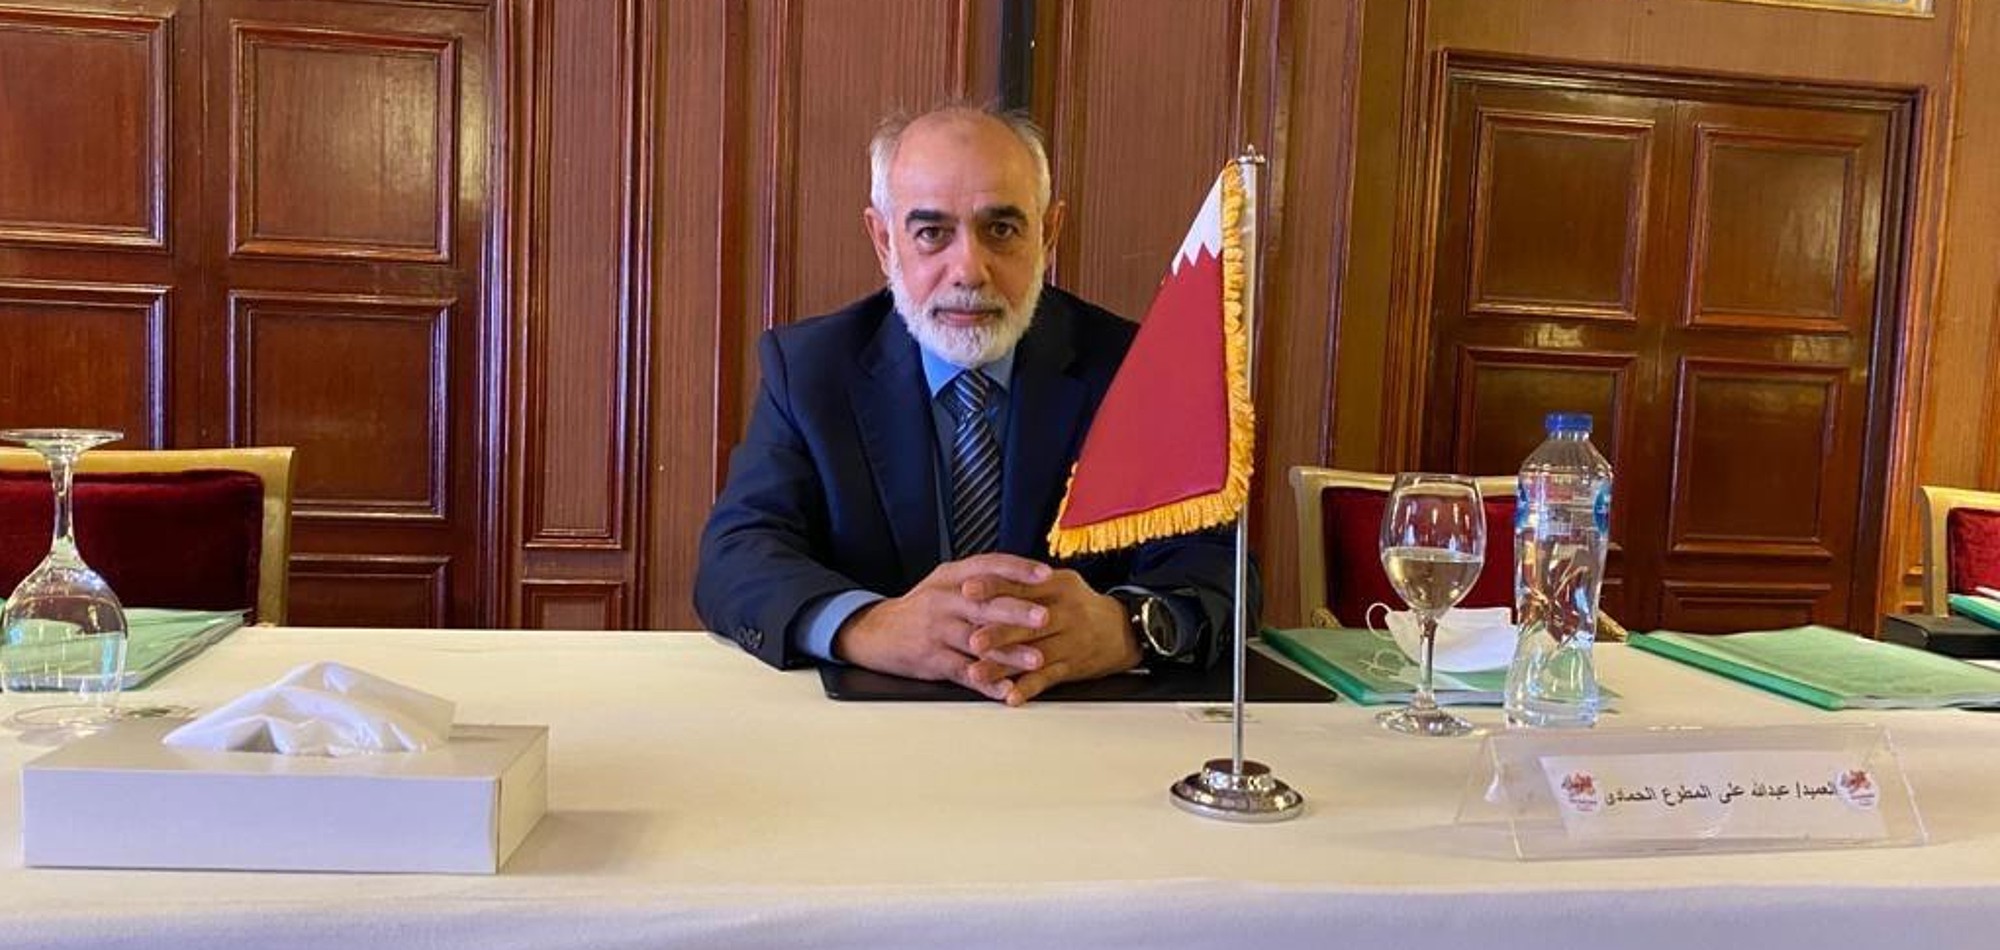 Al Hammadi re-elected as Executive Member of Arab Shooting Federation